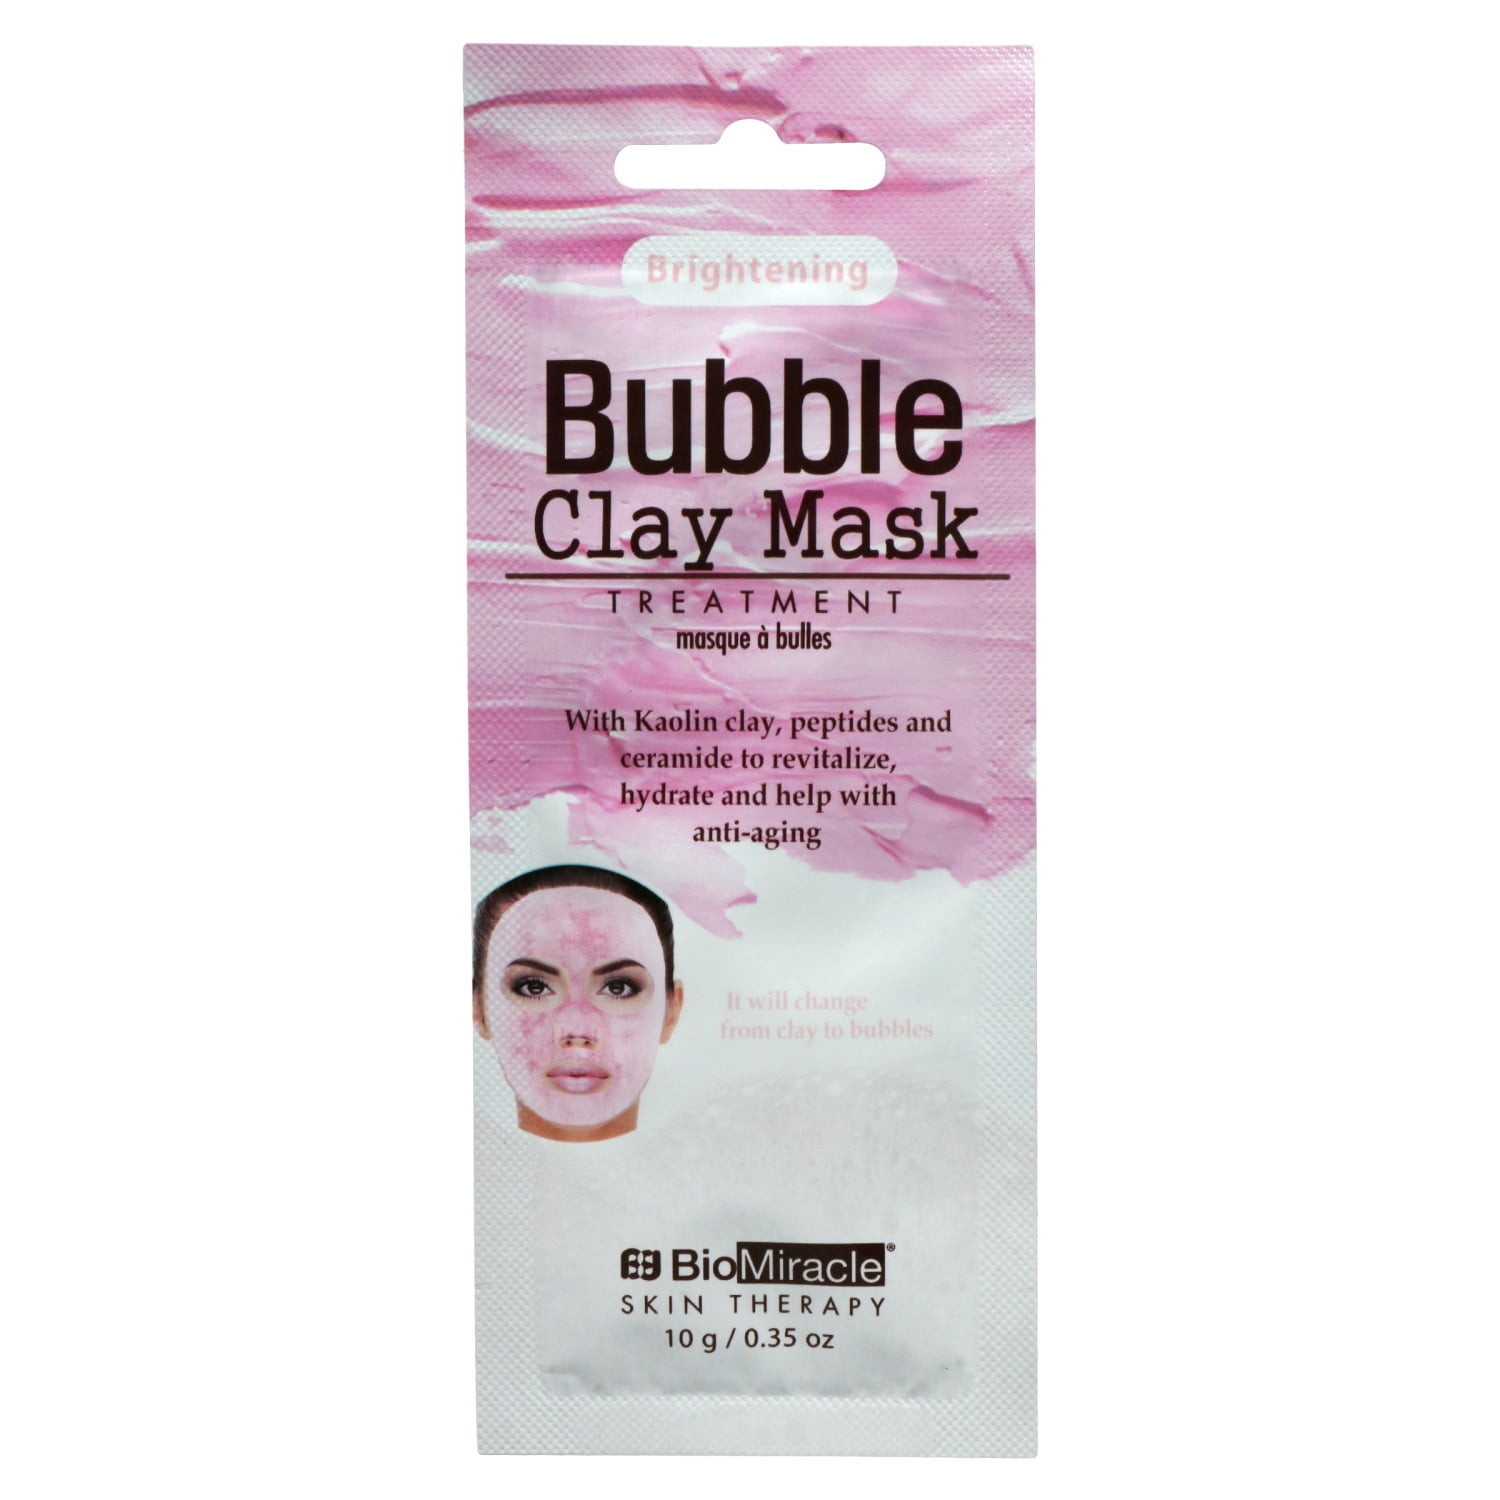 hyppigt Overlevelse tag et billede Clay Mask - Facial Skin Care Products Pink Bubble Clay Masks, 10g - 7 pack  - Walmart.com